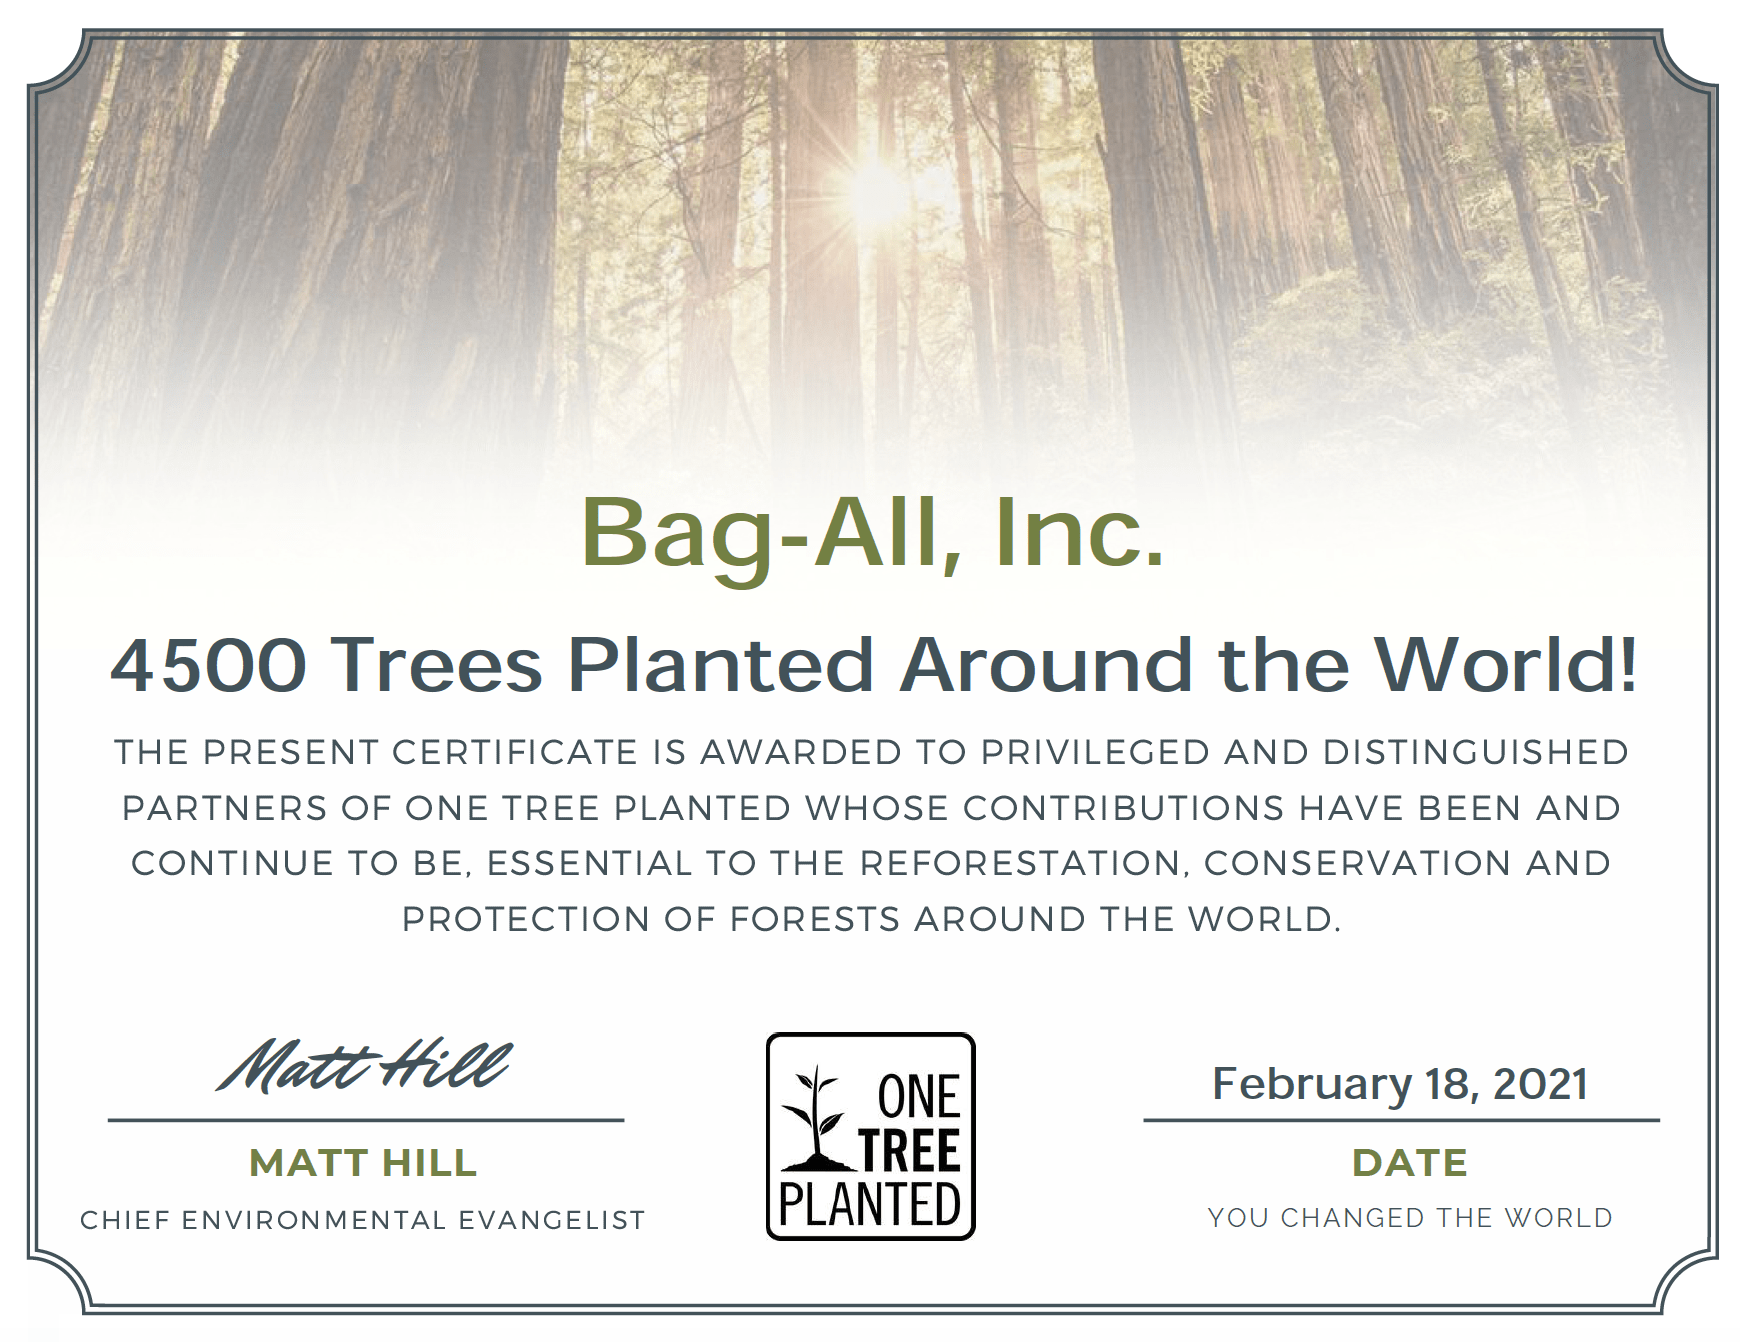 Plant a Tree - Bag-all